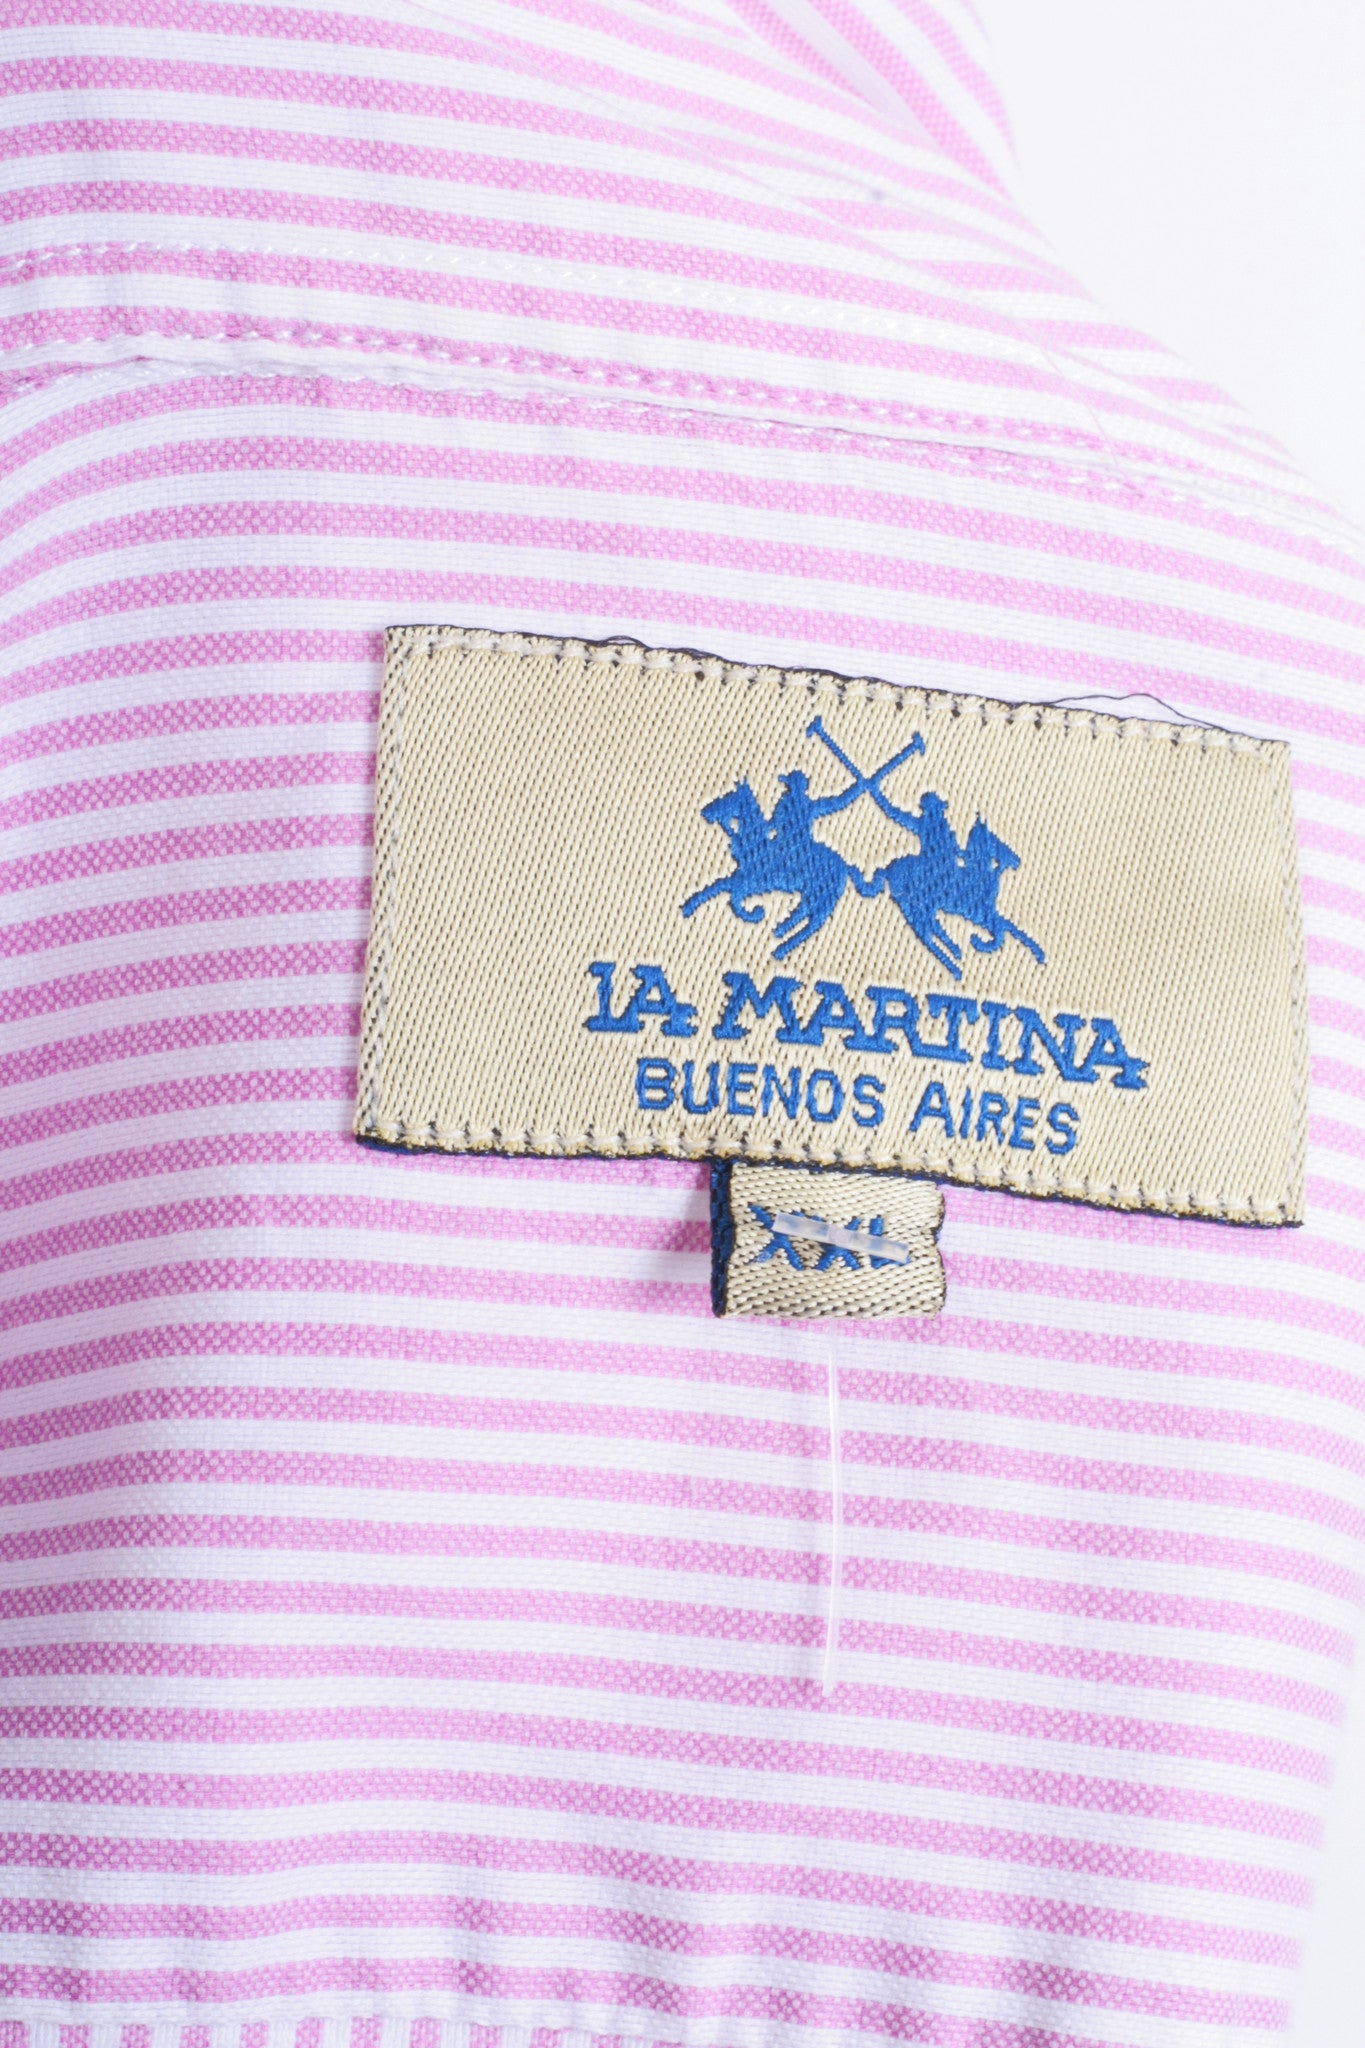 La Martina Mens XXL Casual Shirt Striped Pink Cotton Buenos Aires - RetrospectClothes